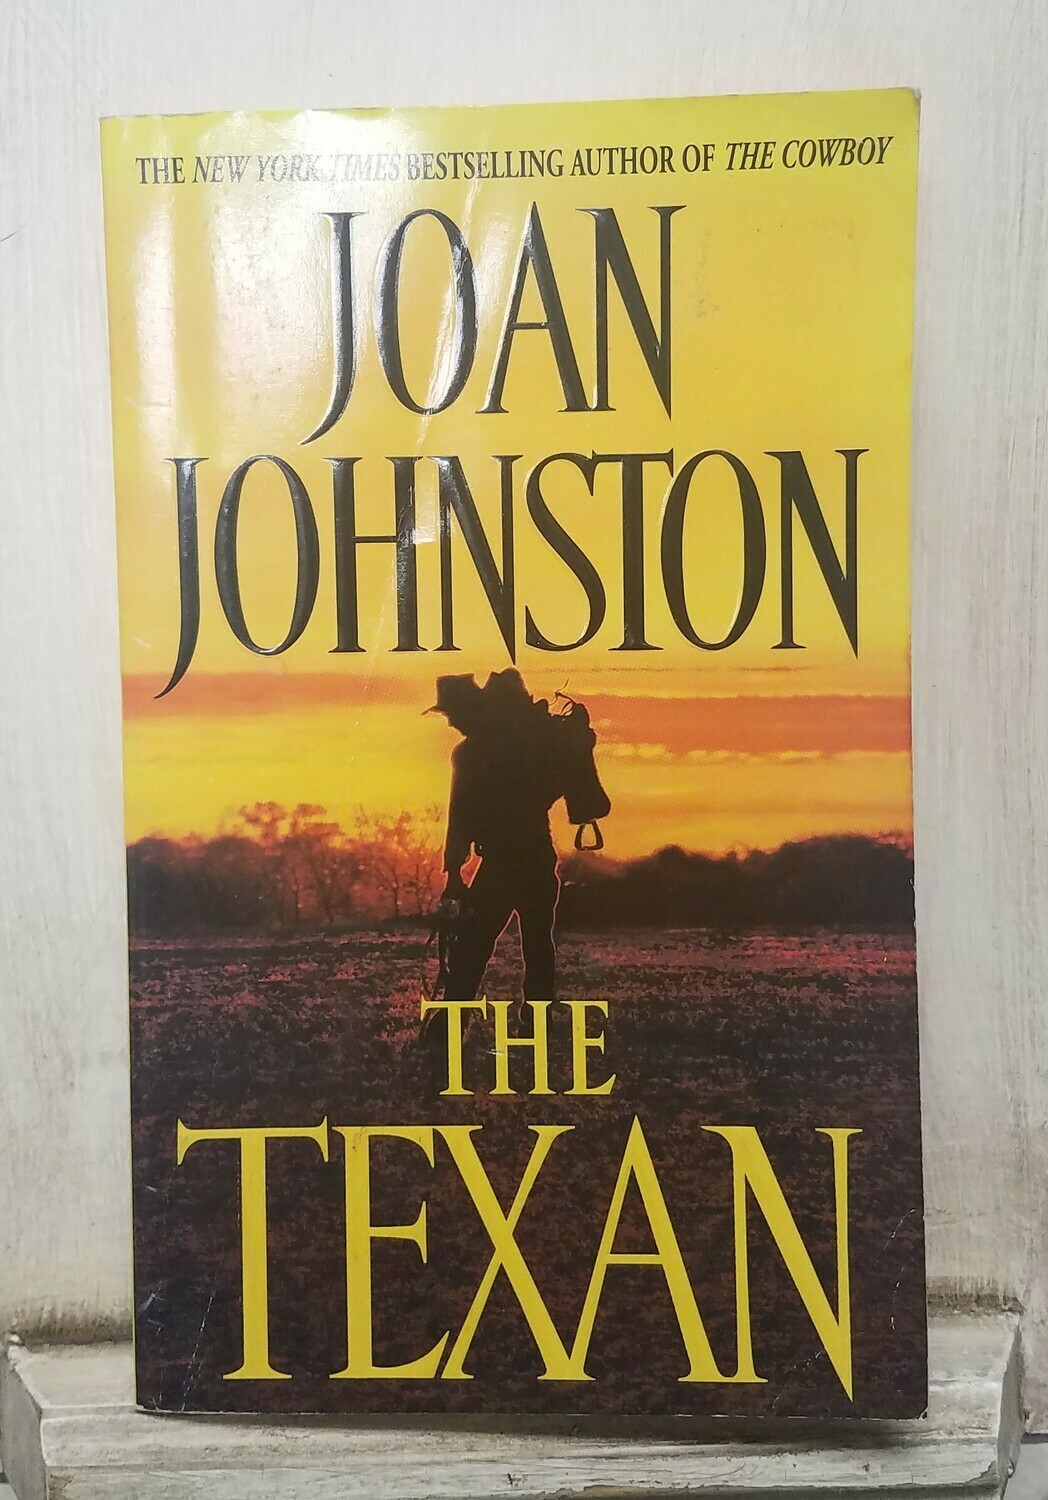 The Texan by Joan Johnston